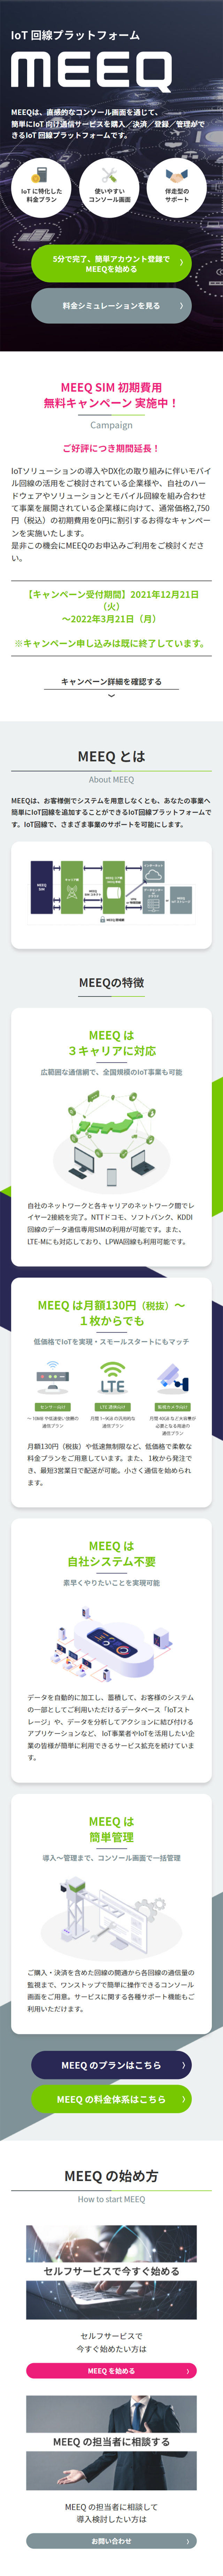 IoT回線プラットフォーム MEEQ_sp_1